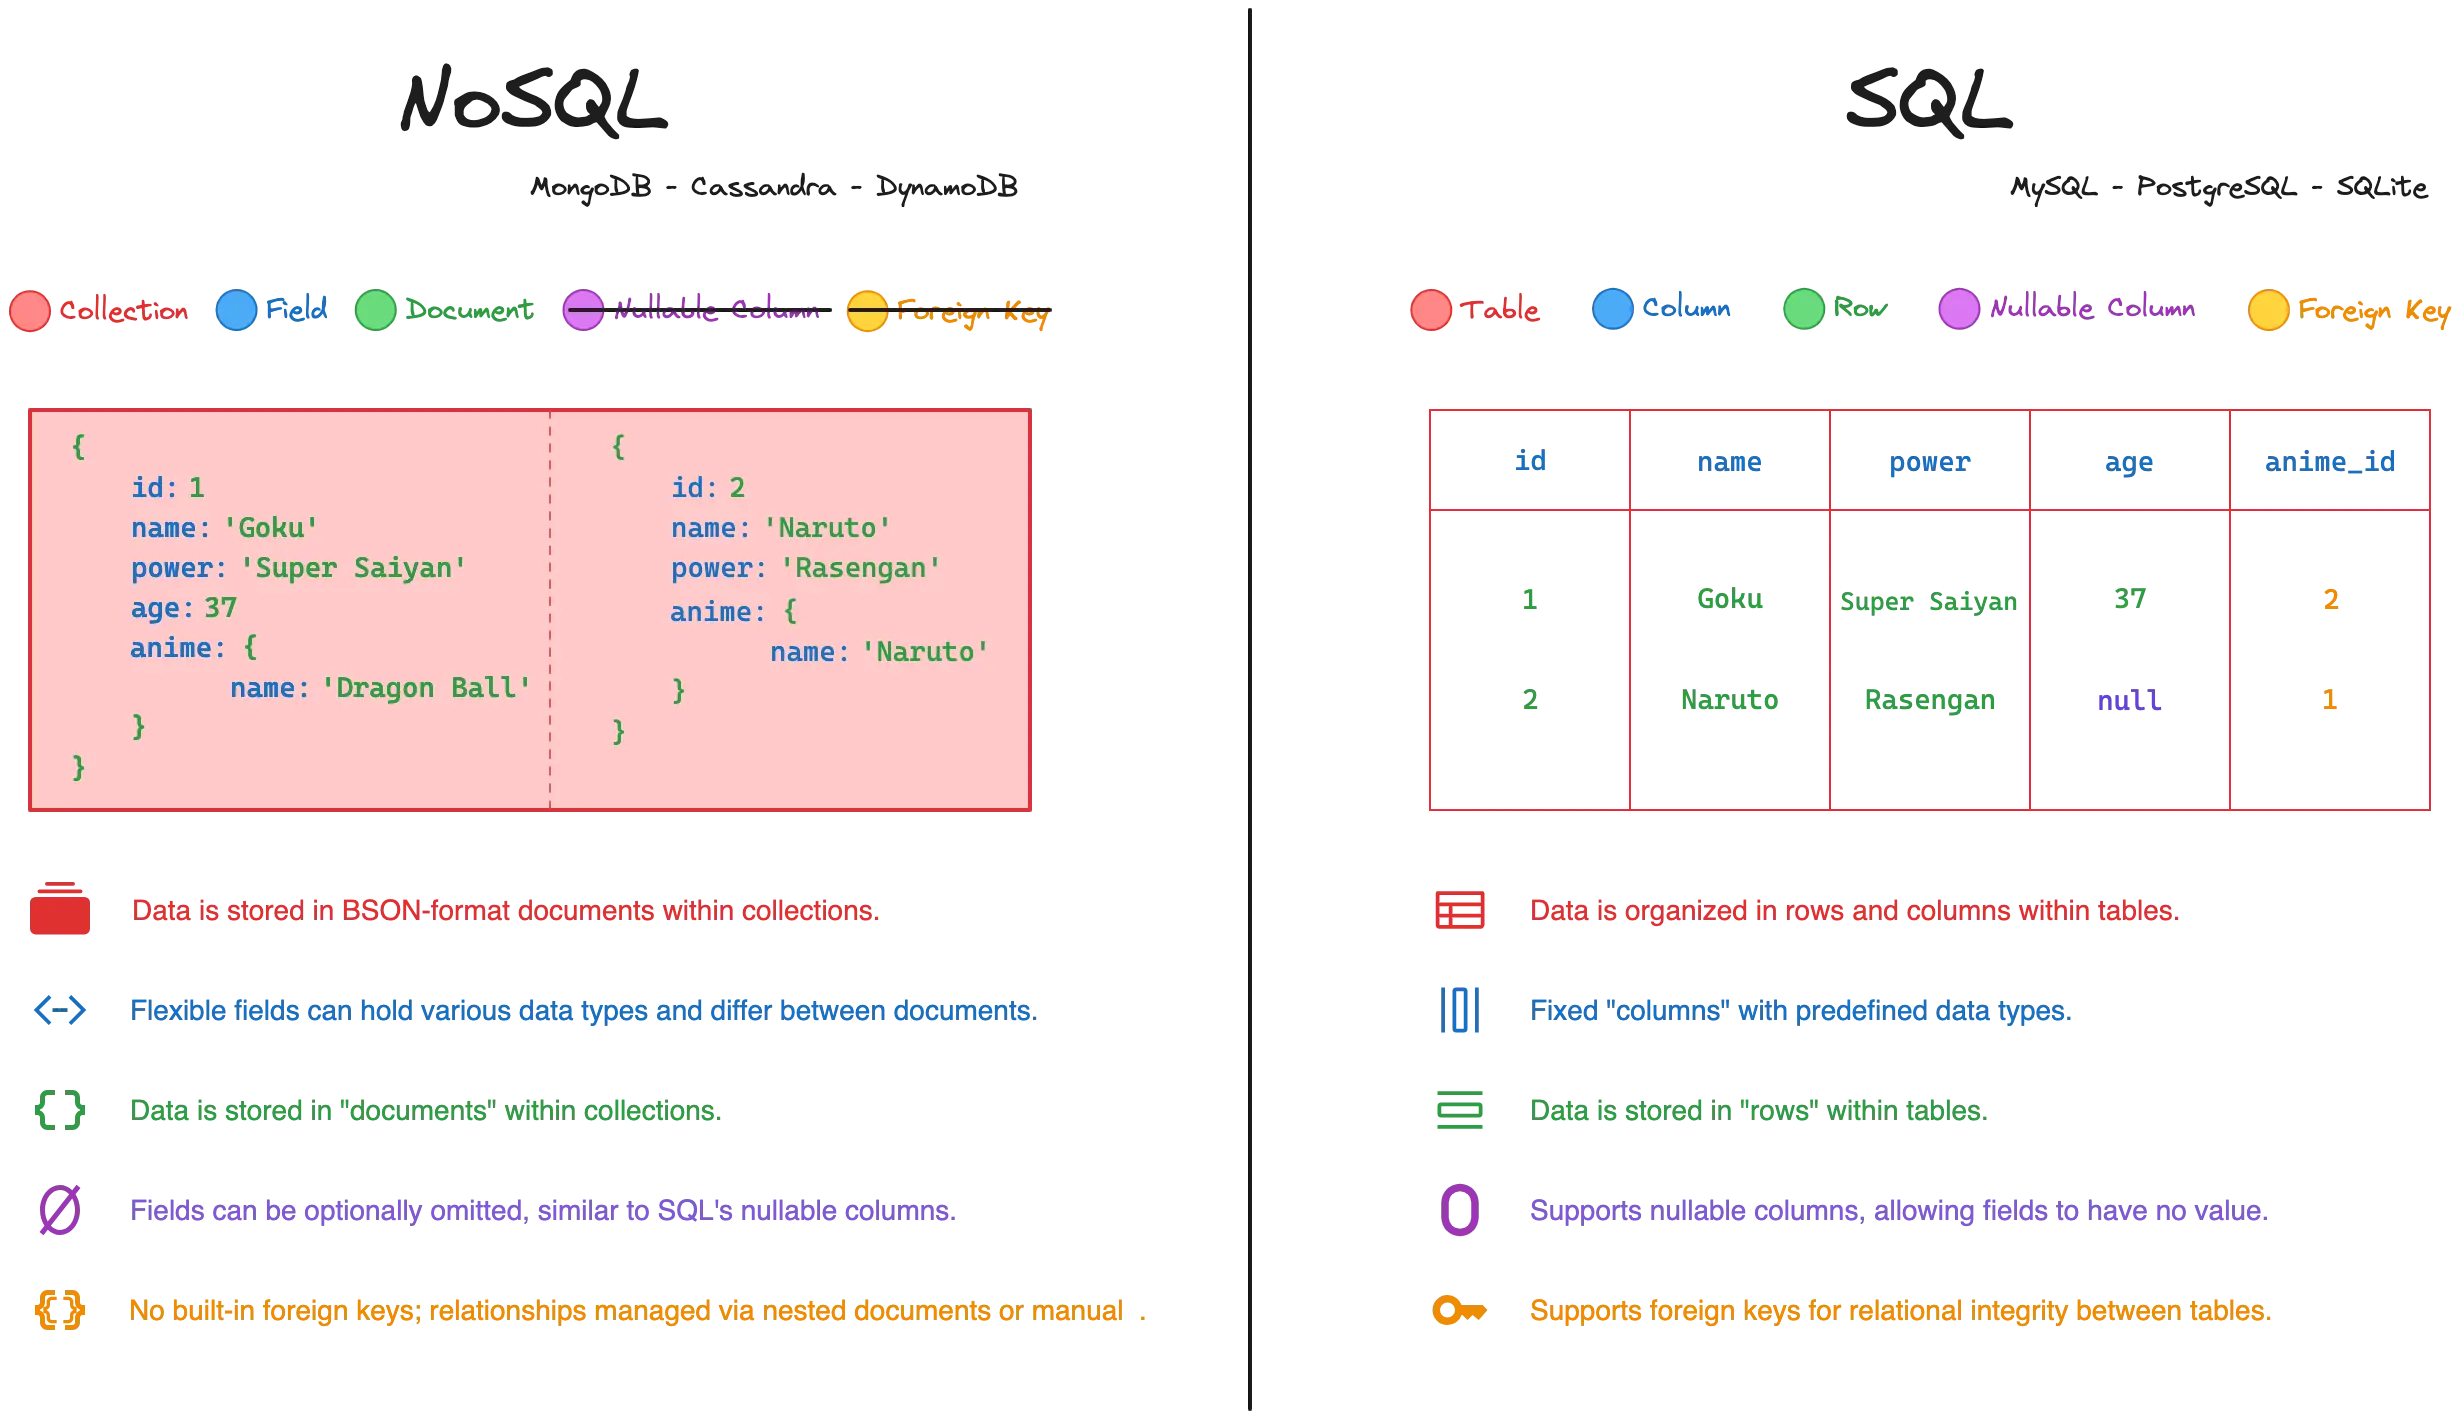 SQL VS NoSQL - Storage and Terminology